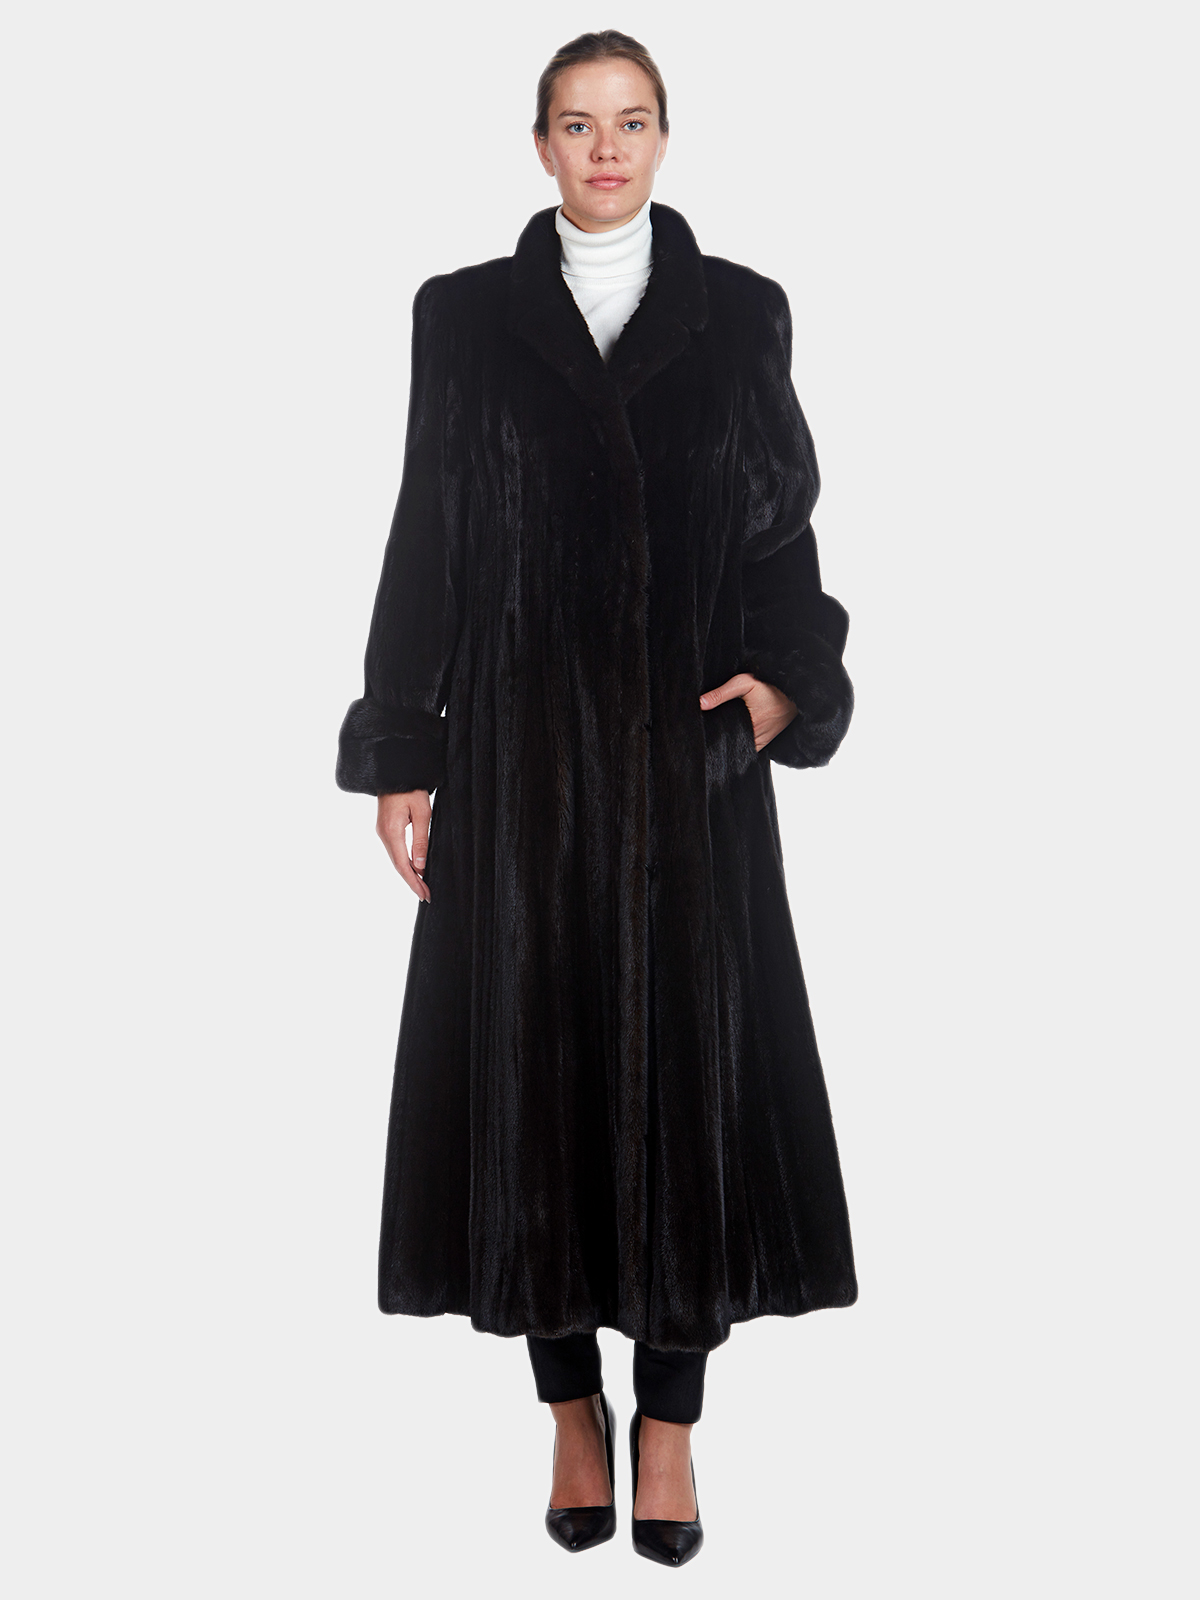 Woman's Full Length Neiman Marcus Ranch Mink Fur Coat